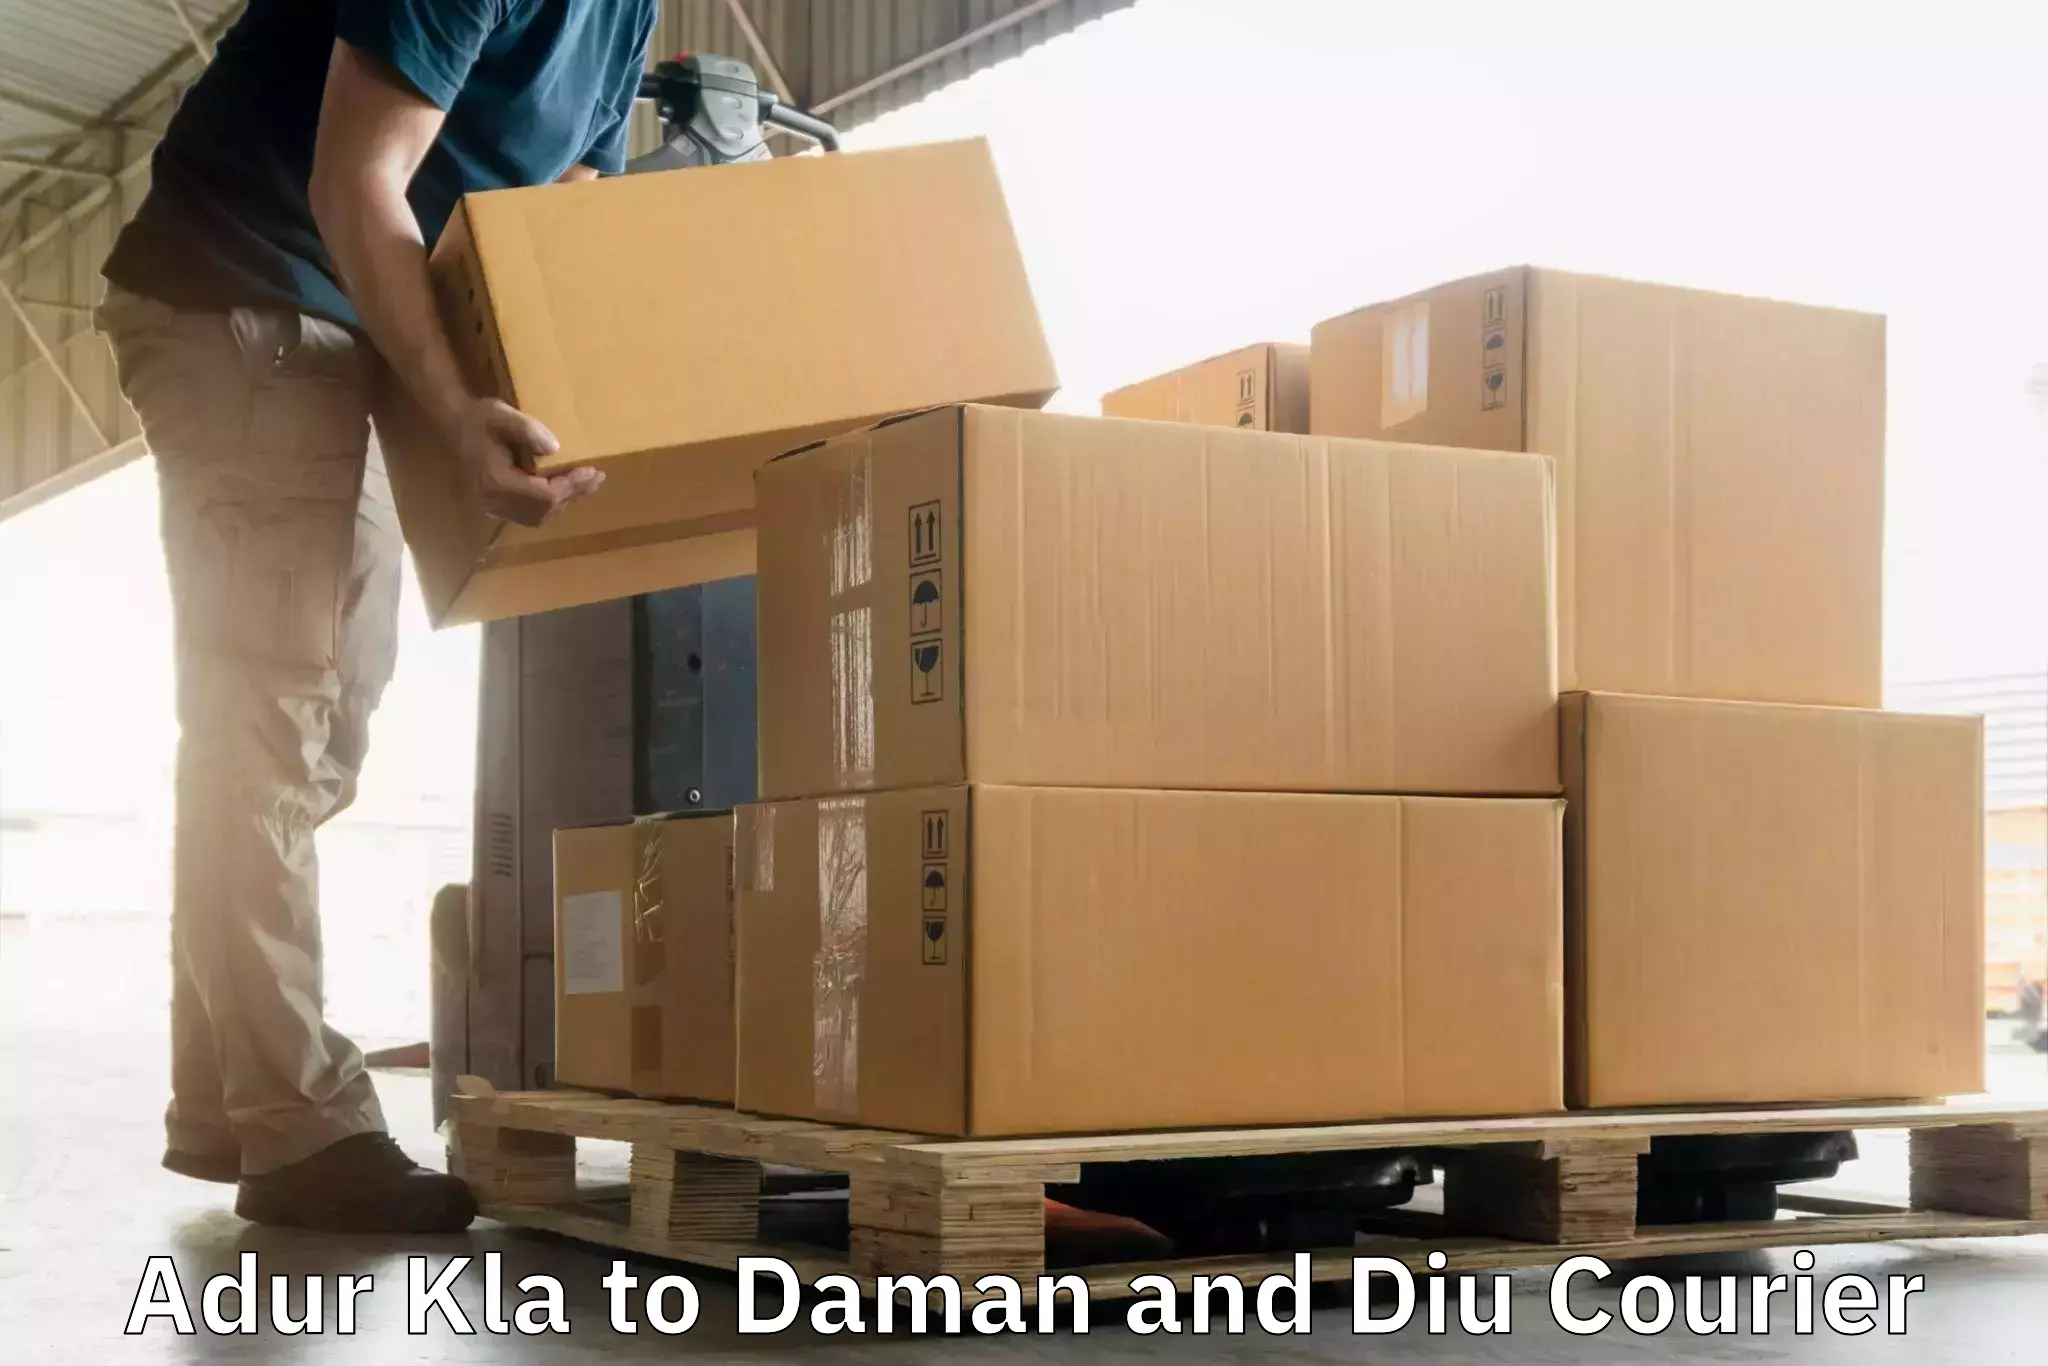 Logistics service provider Adur Kla to Daman